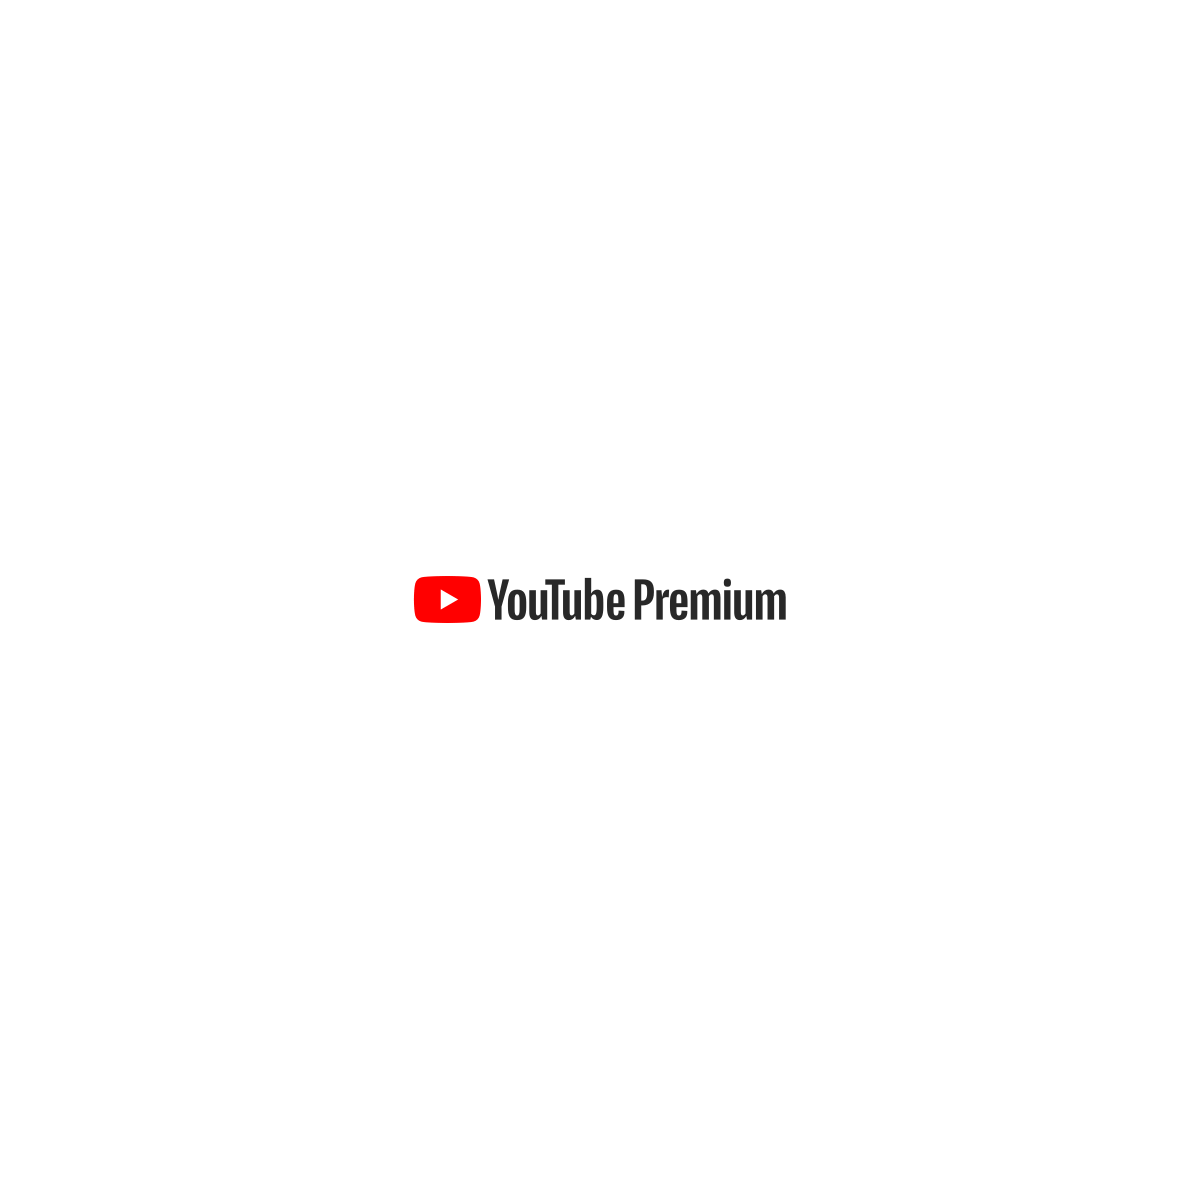 YouTube Official Logo - YouTube Premium - YouTube